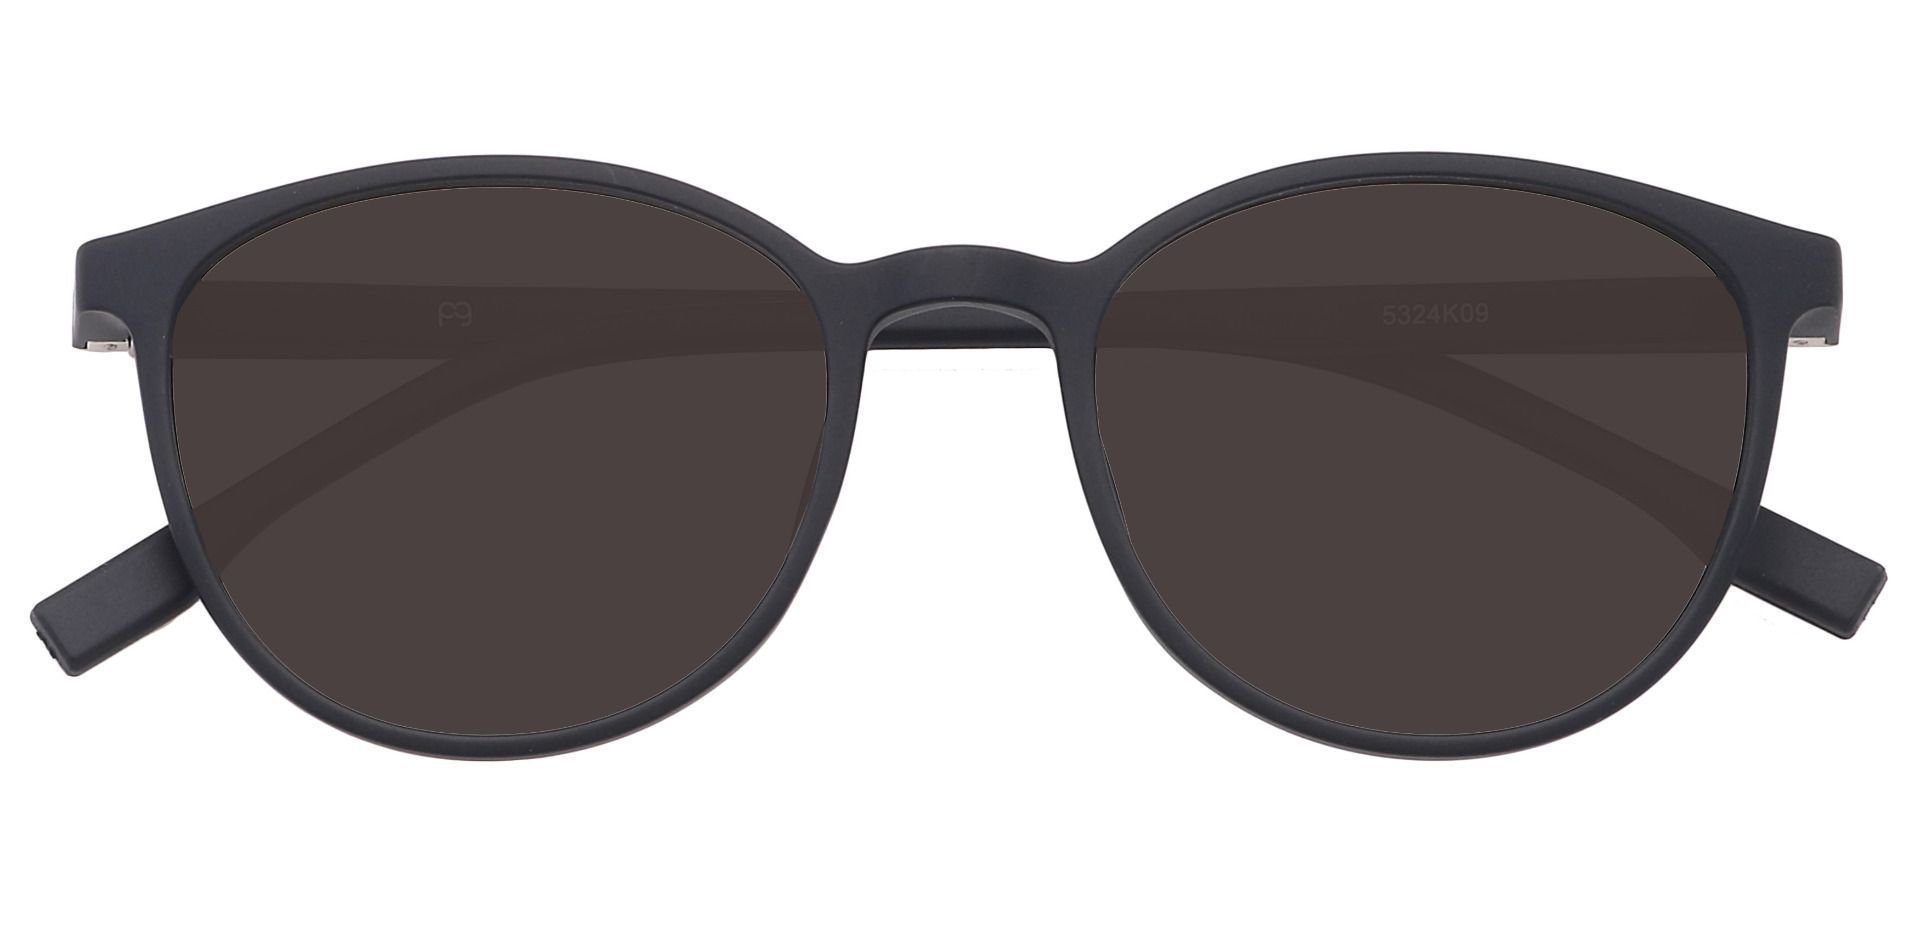 Bay Round Reading Sunglasses - Black Frame With Gray Lenses